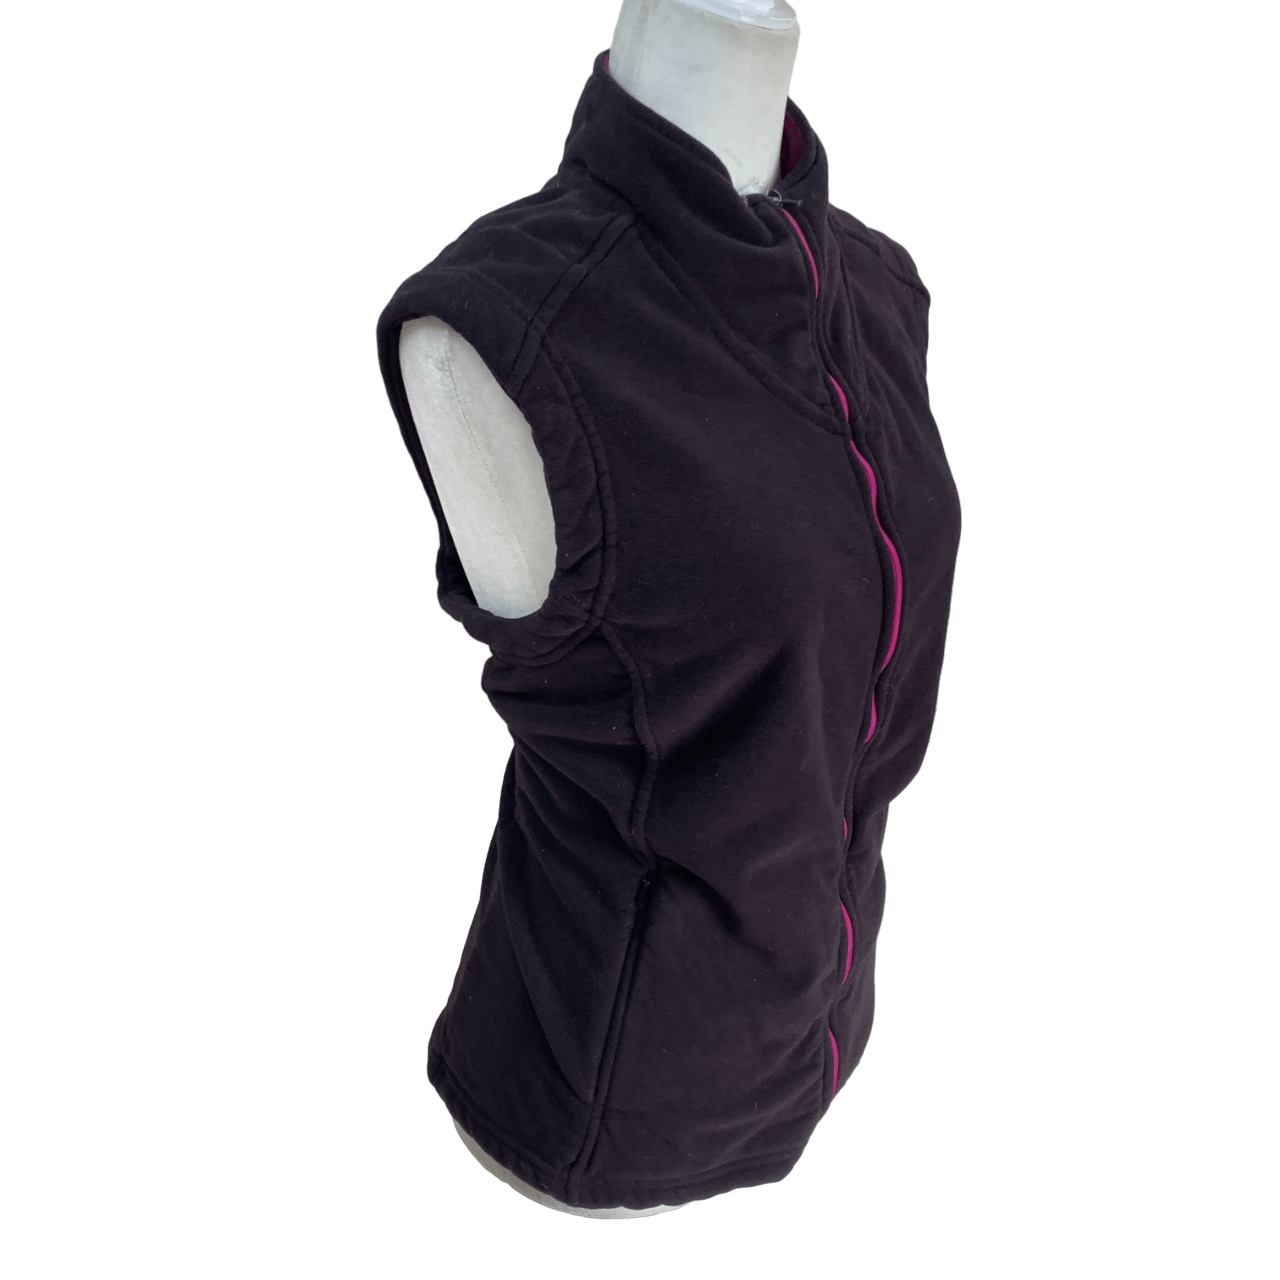 Irideon Fleece Vest in Black / Purple - Woman's X-Large